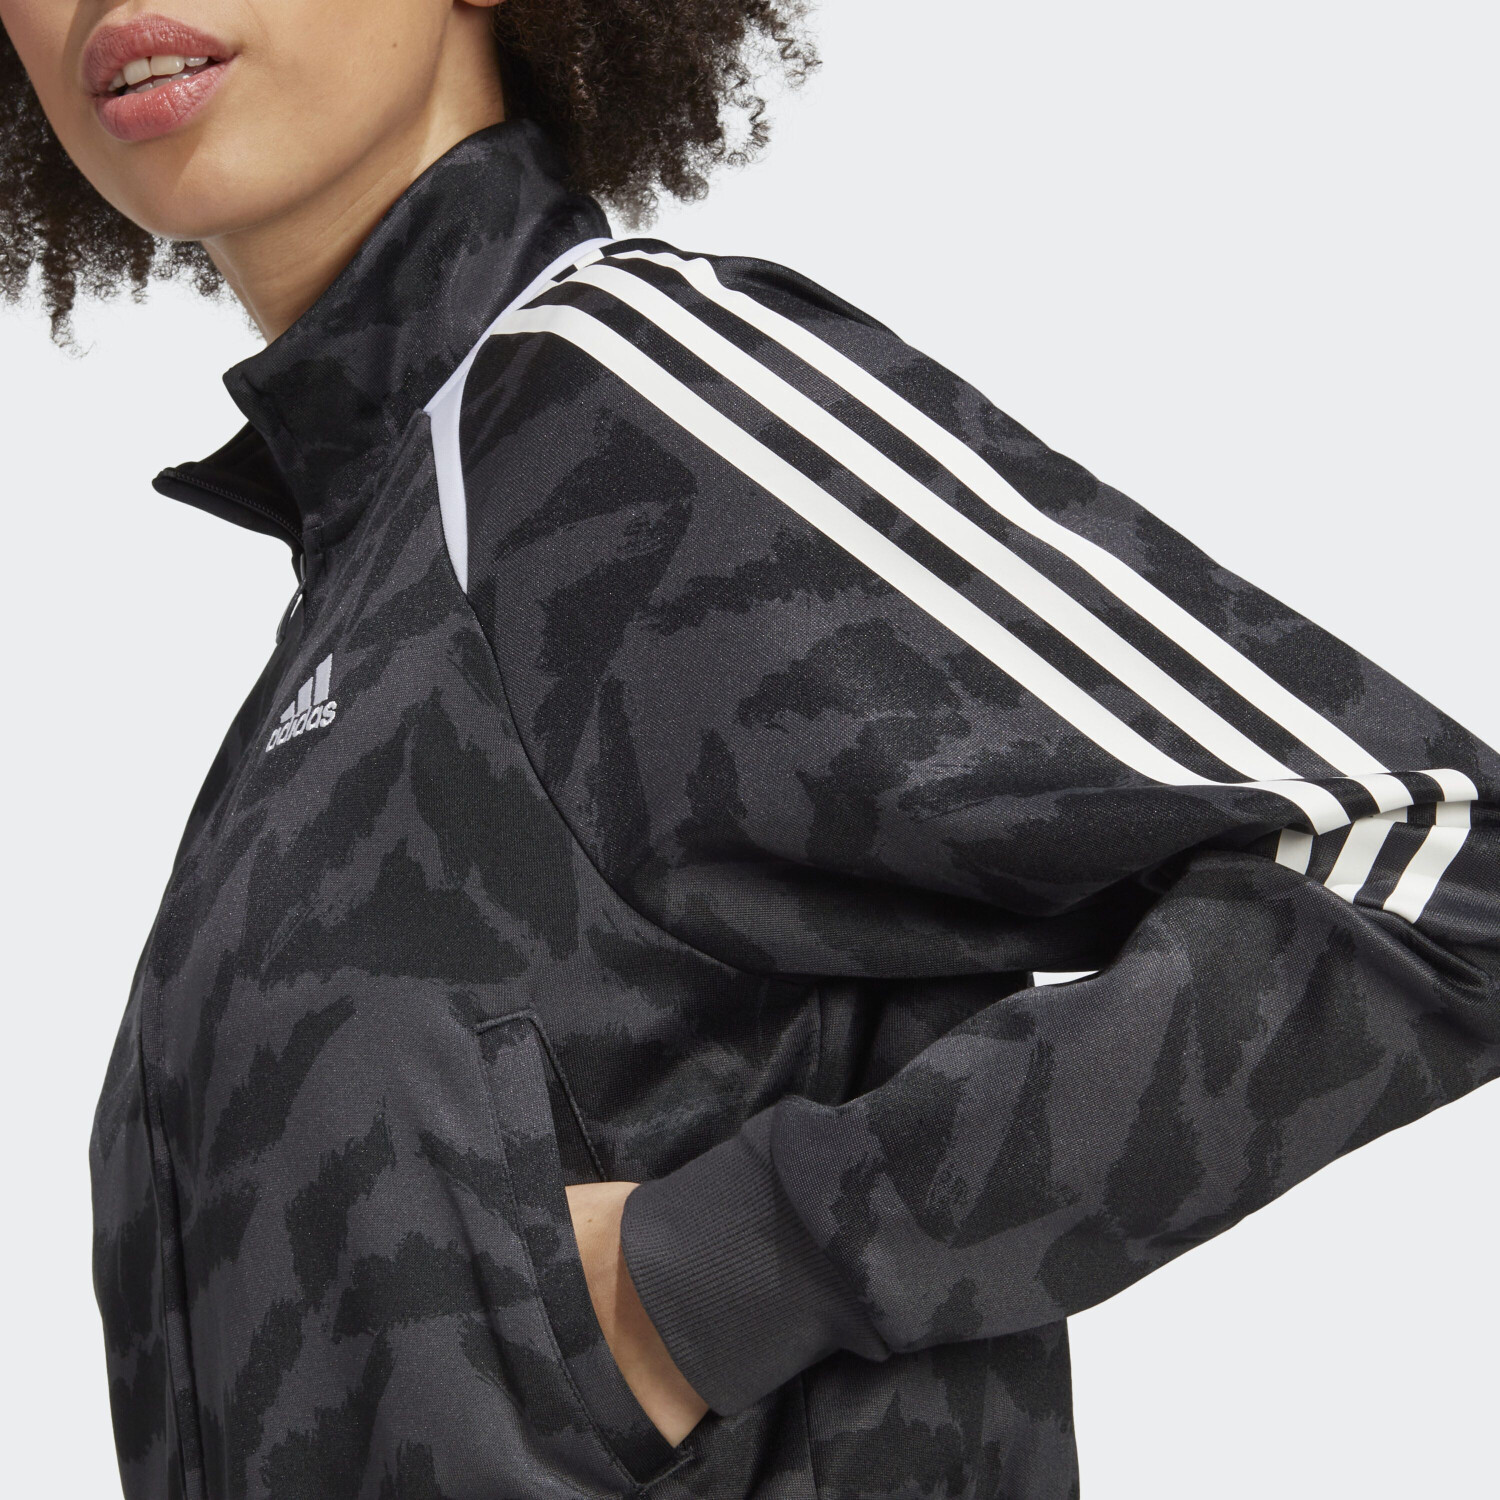 Adidas Tiro Suit Up 45,99 | € ab carbon/black/white/white Lifestyle Preisvergleich Trainingsjacke bei